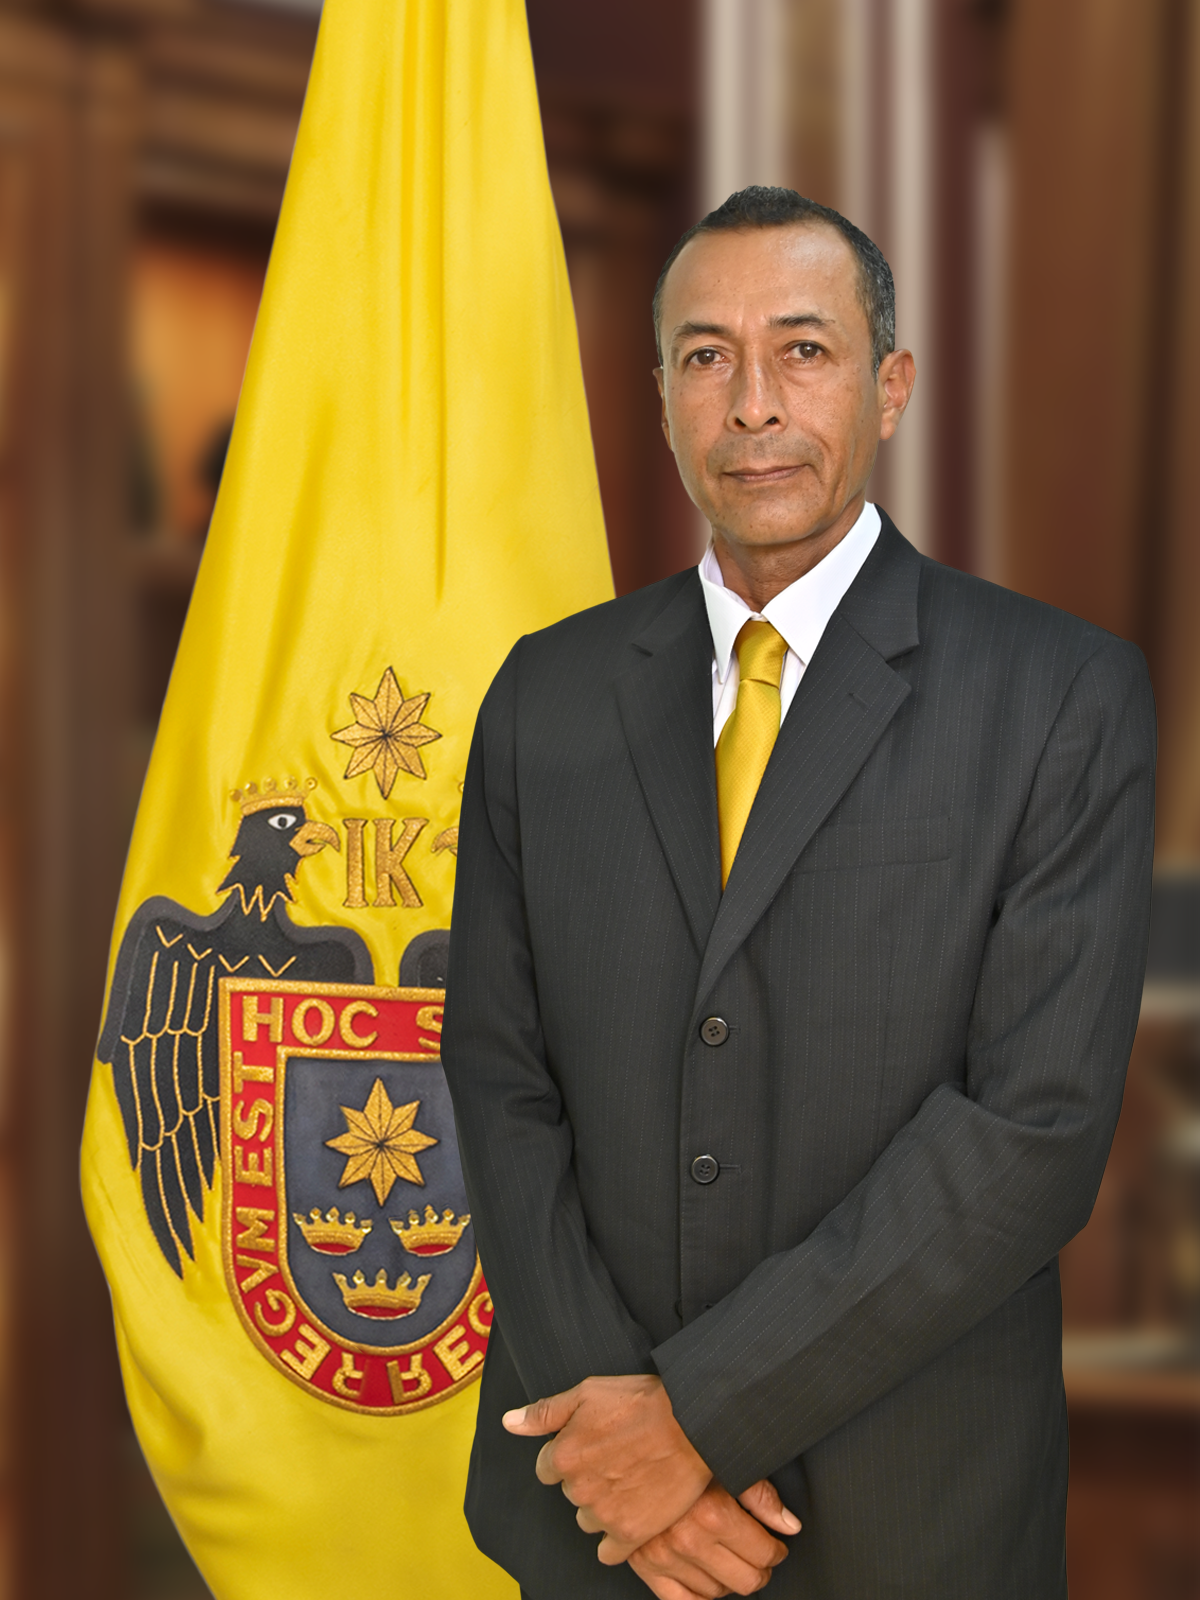 Martin Alexander Soriano Avalos